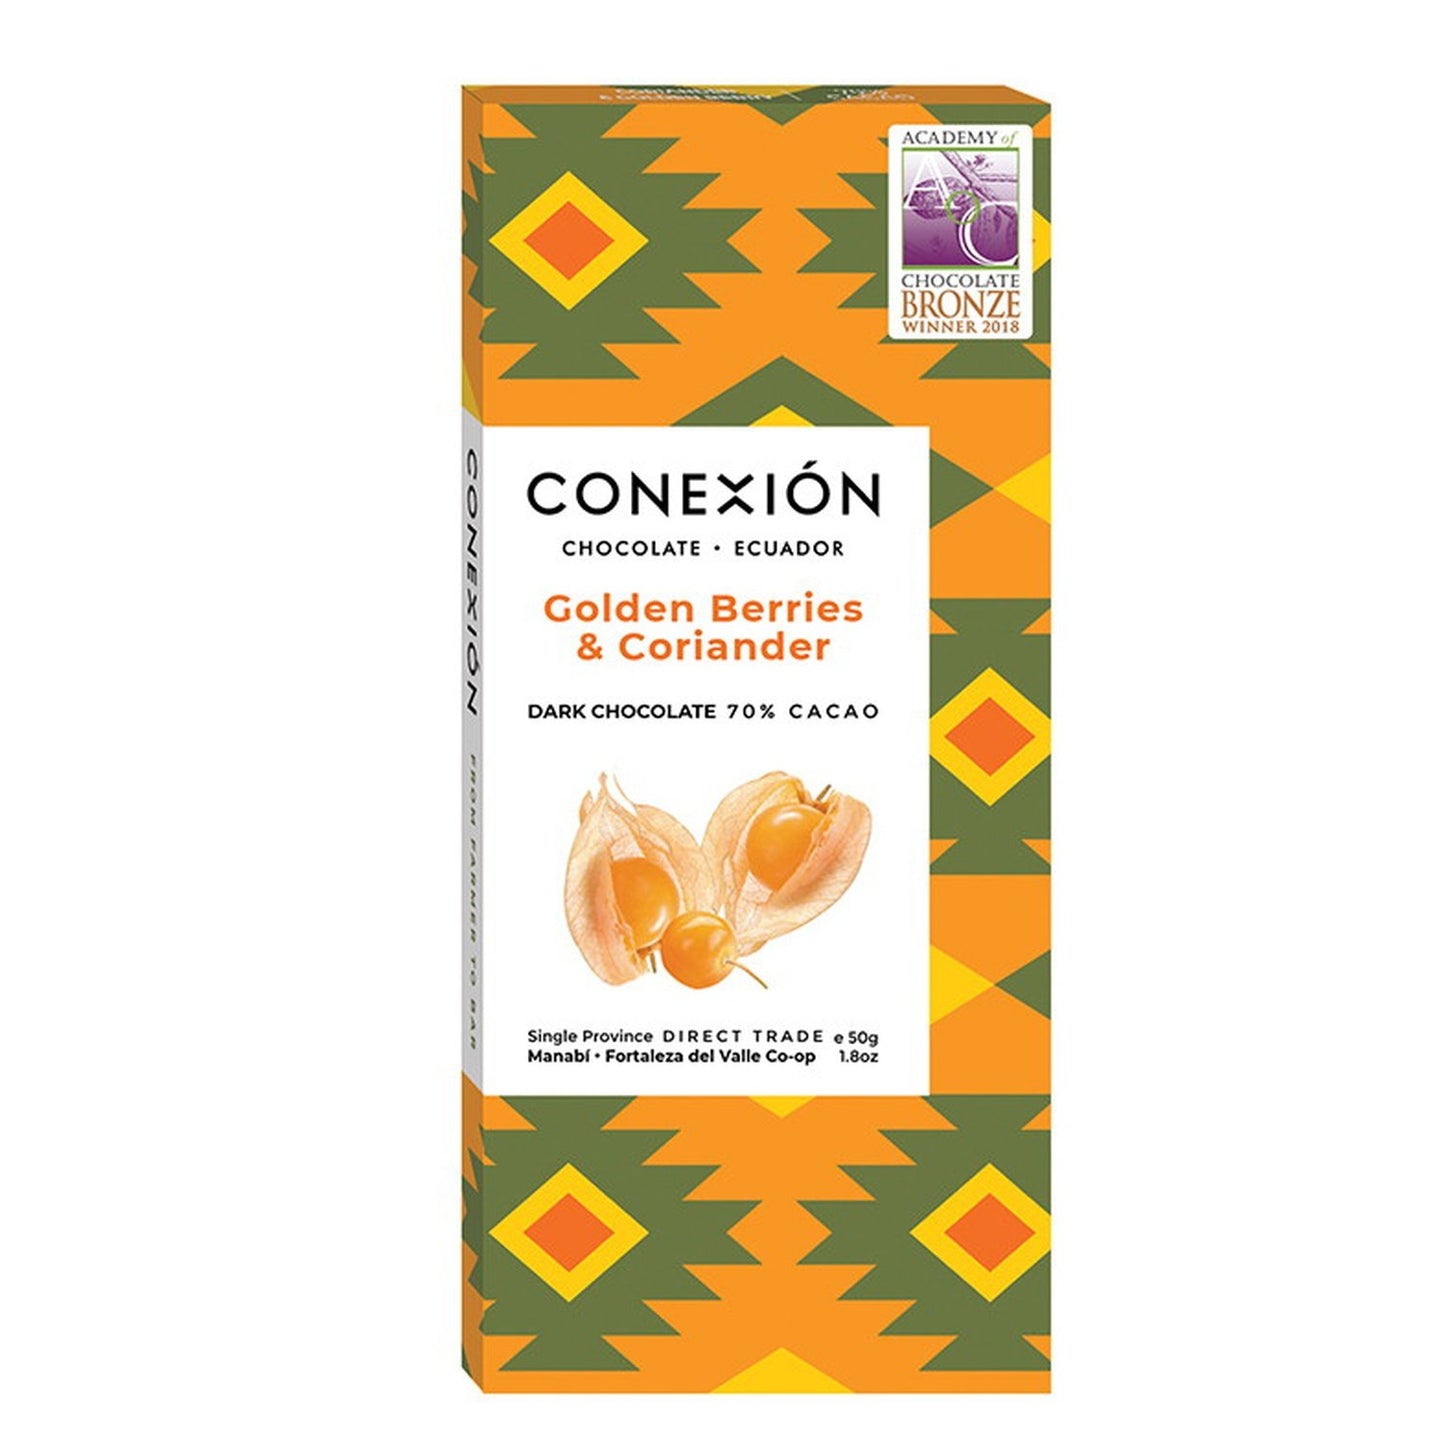 Golden Berries & Coriander 70% conexion-chocolates